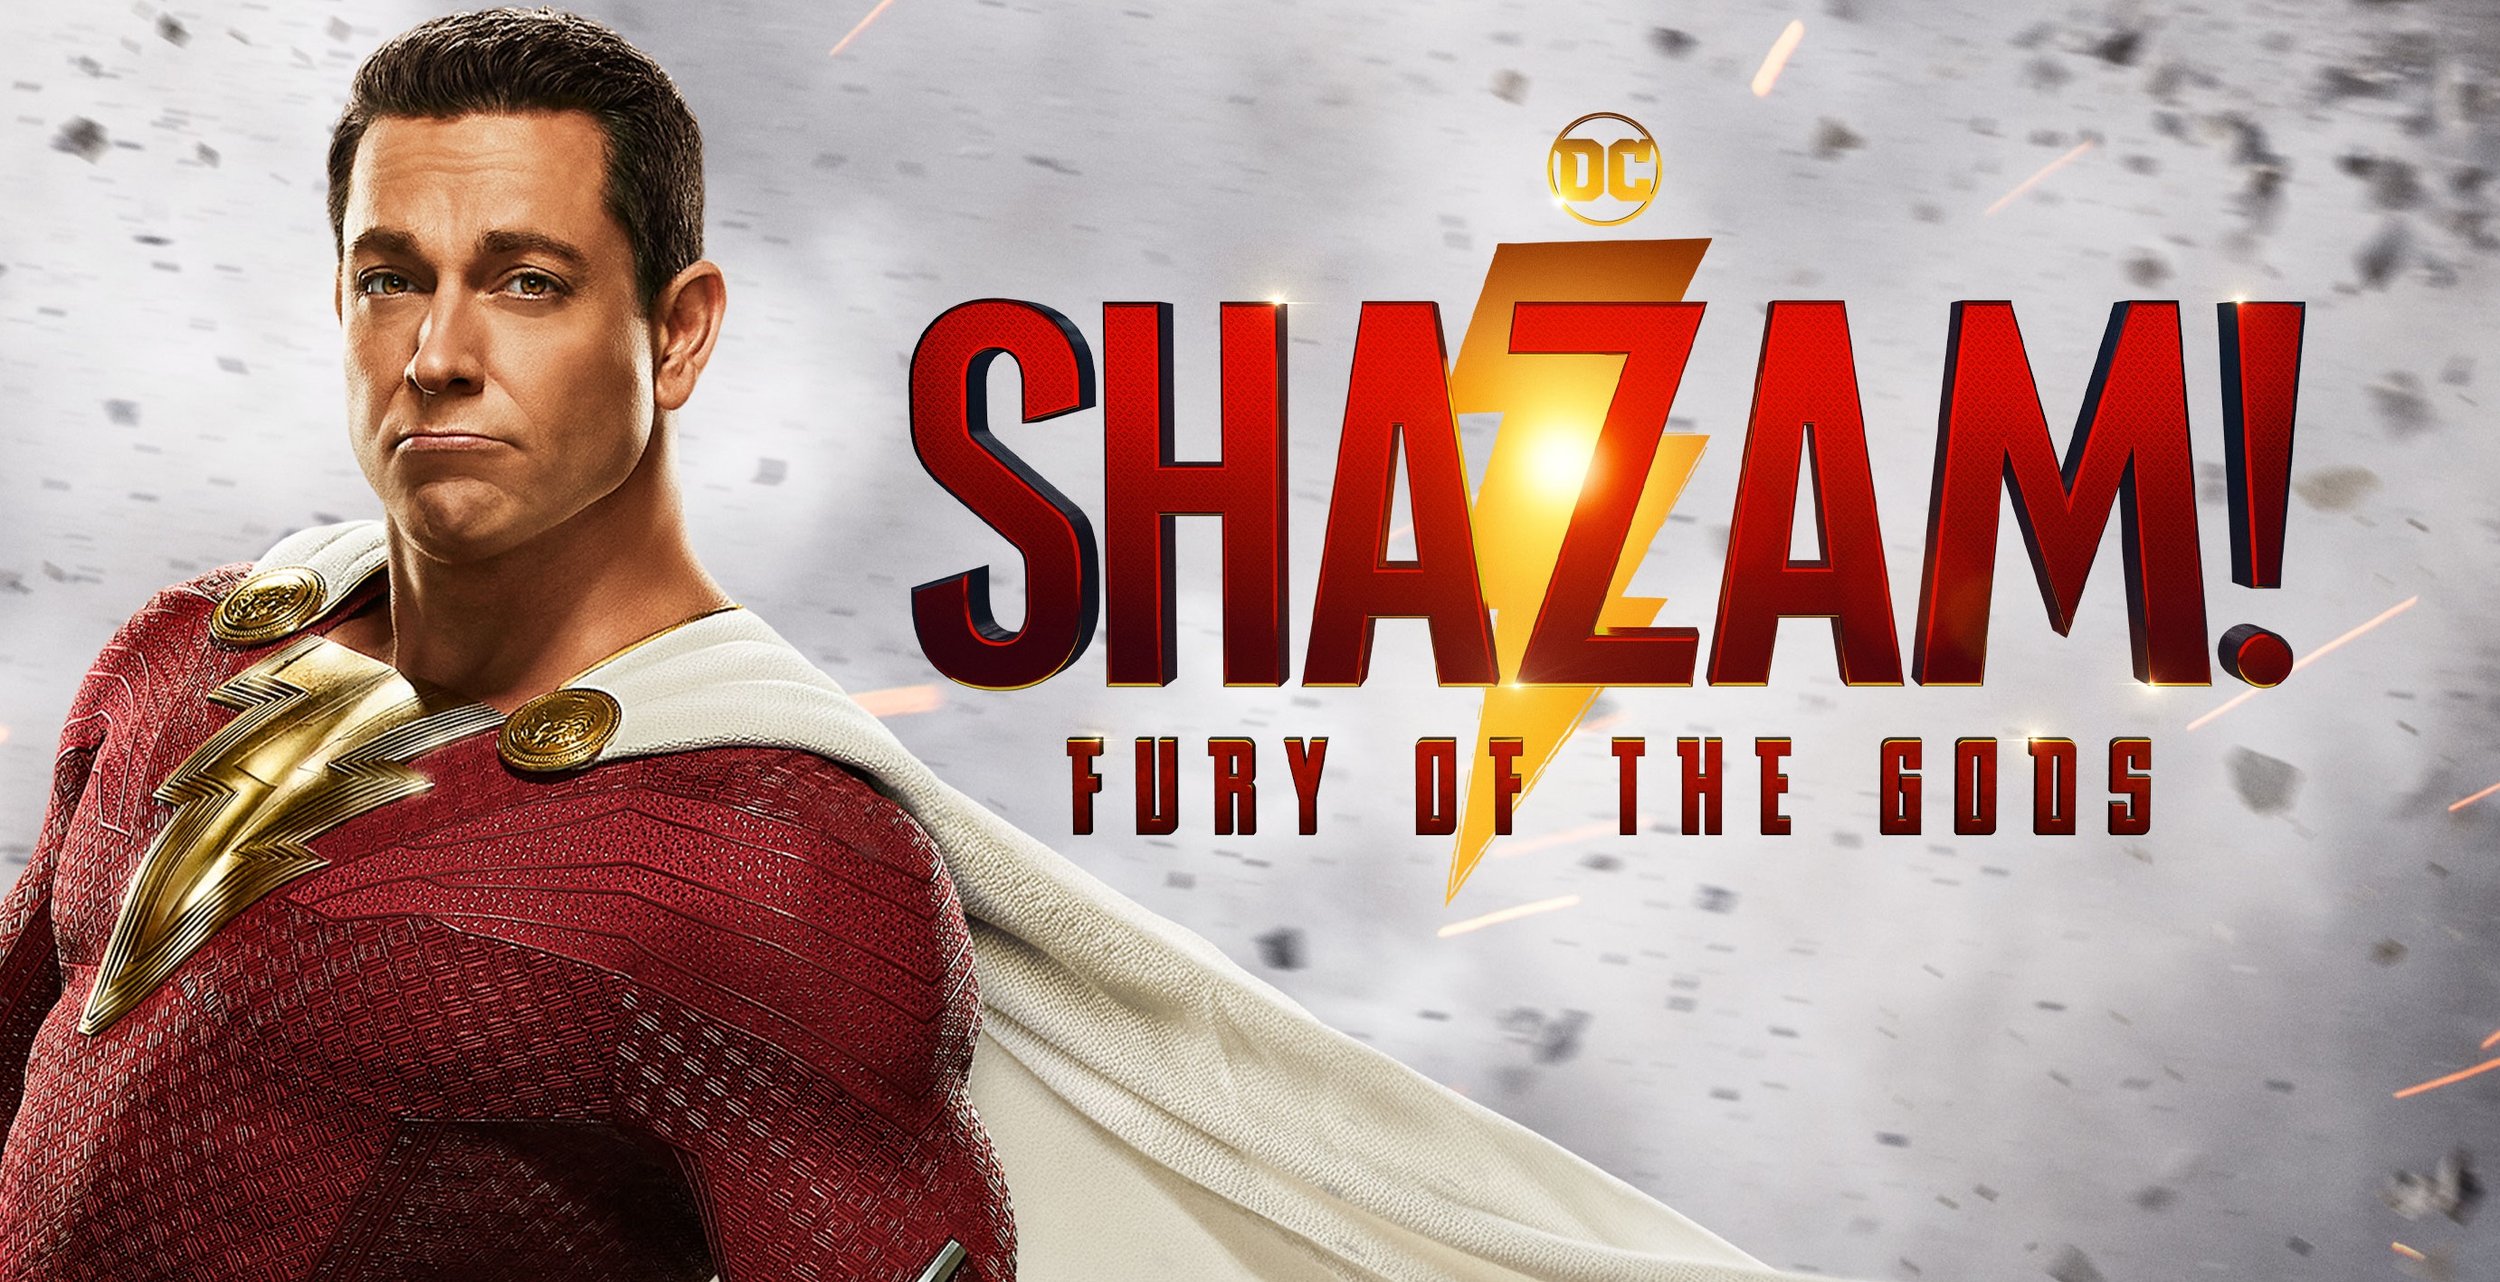 Slideshow: Shazam! Fury of the Gods: The Entire Cast of the